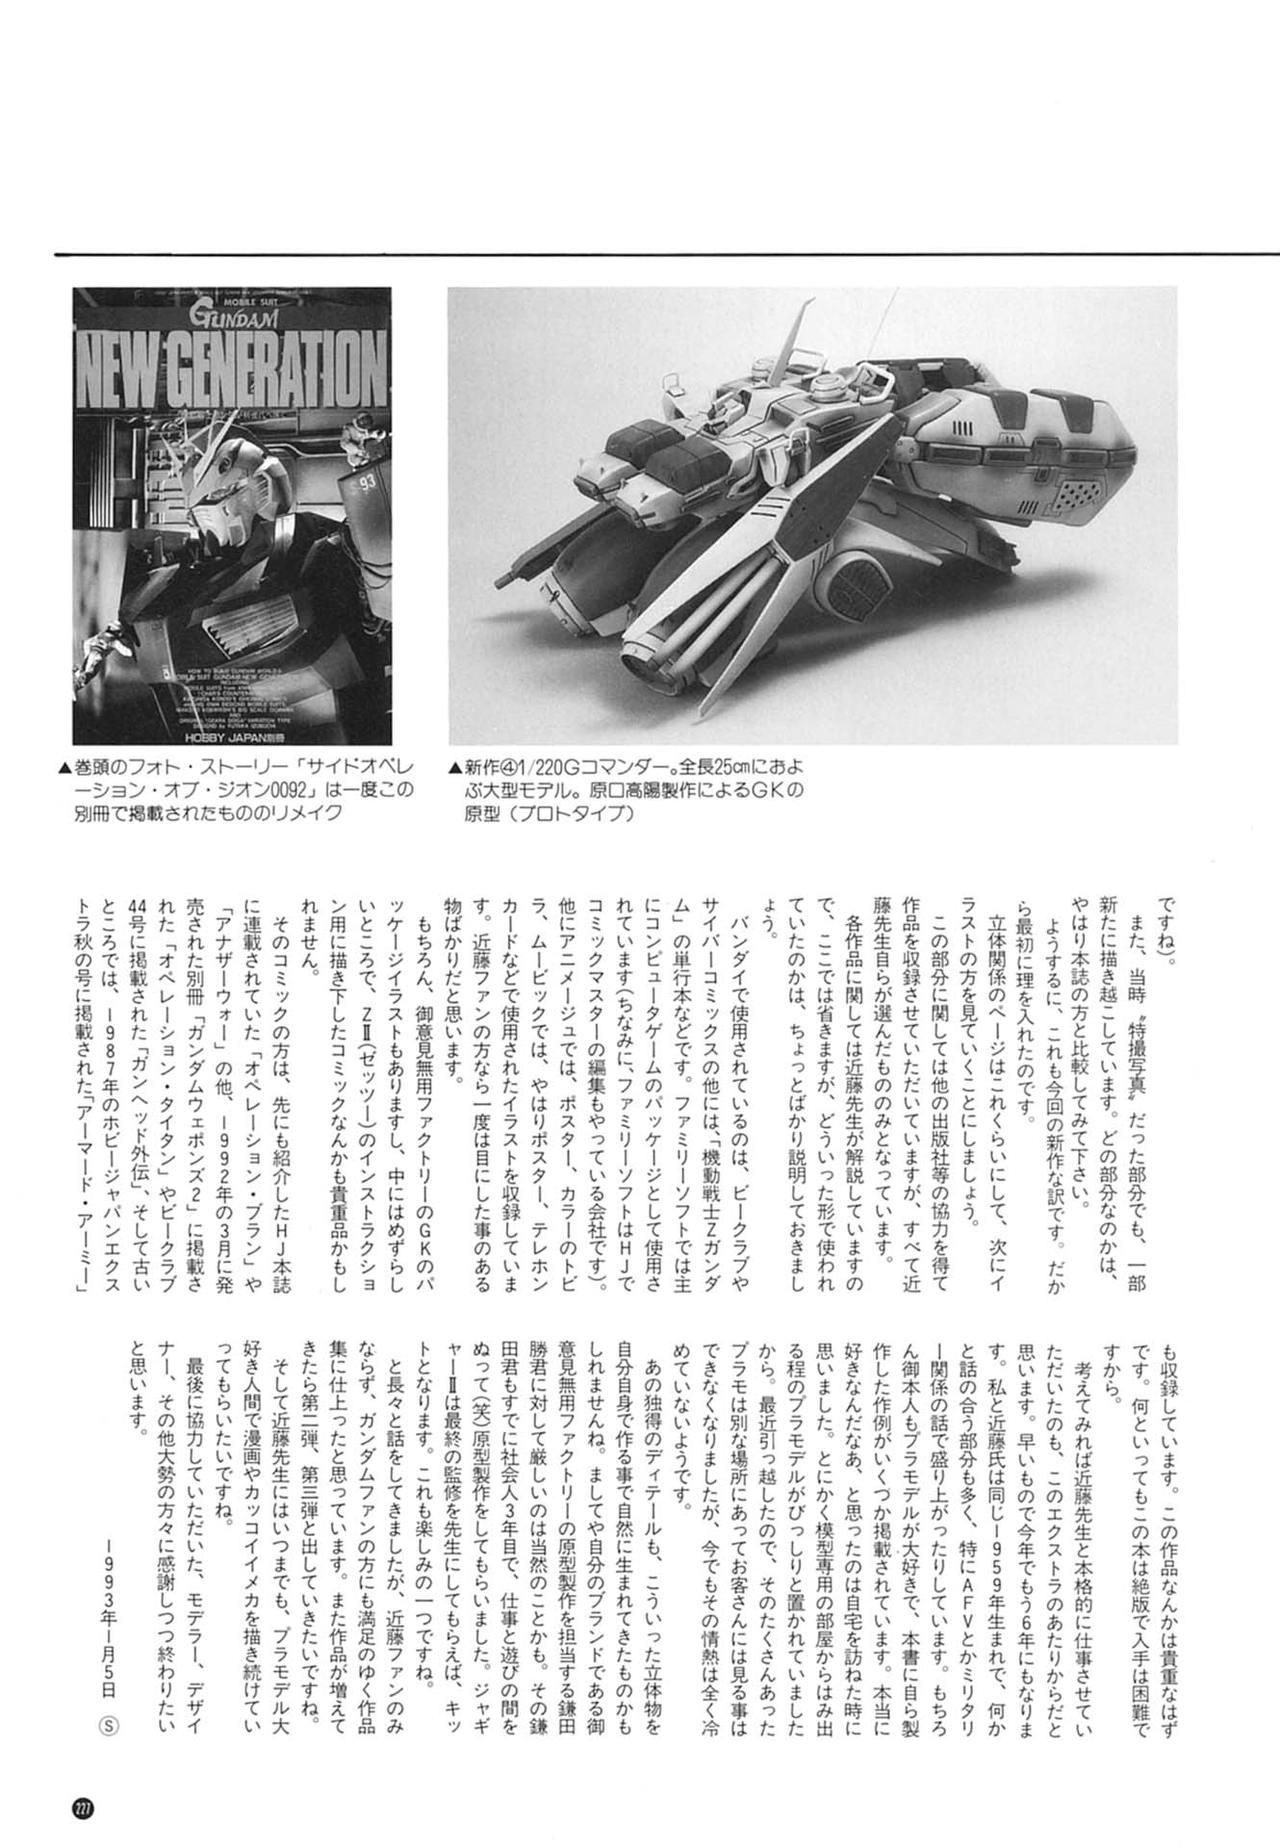 [Kazuhisa Kondo] Kazuhisa Kondo 2D & 3D Works - Go Ahead - From Mobile Suit Gundam to Original Mechanism 226